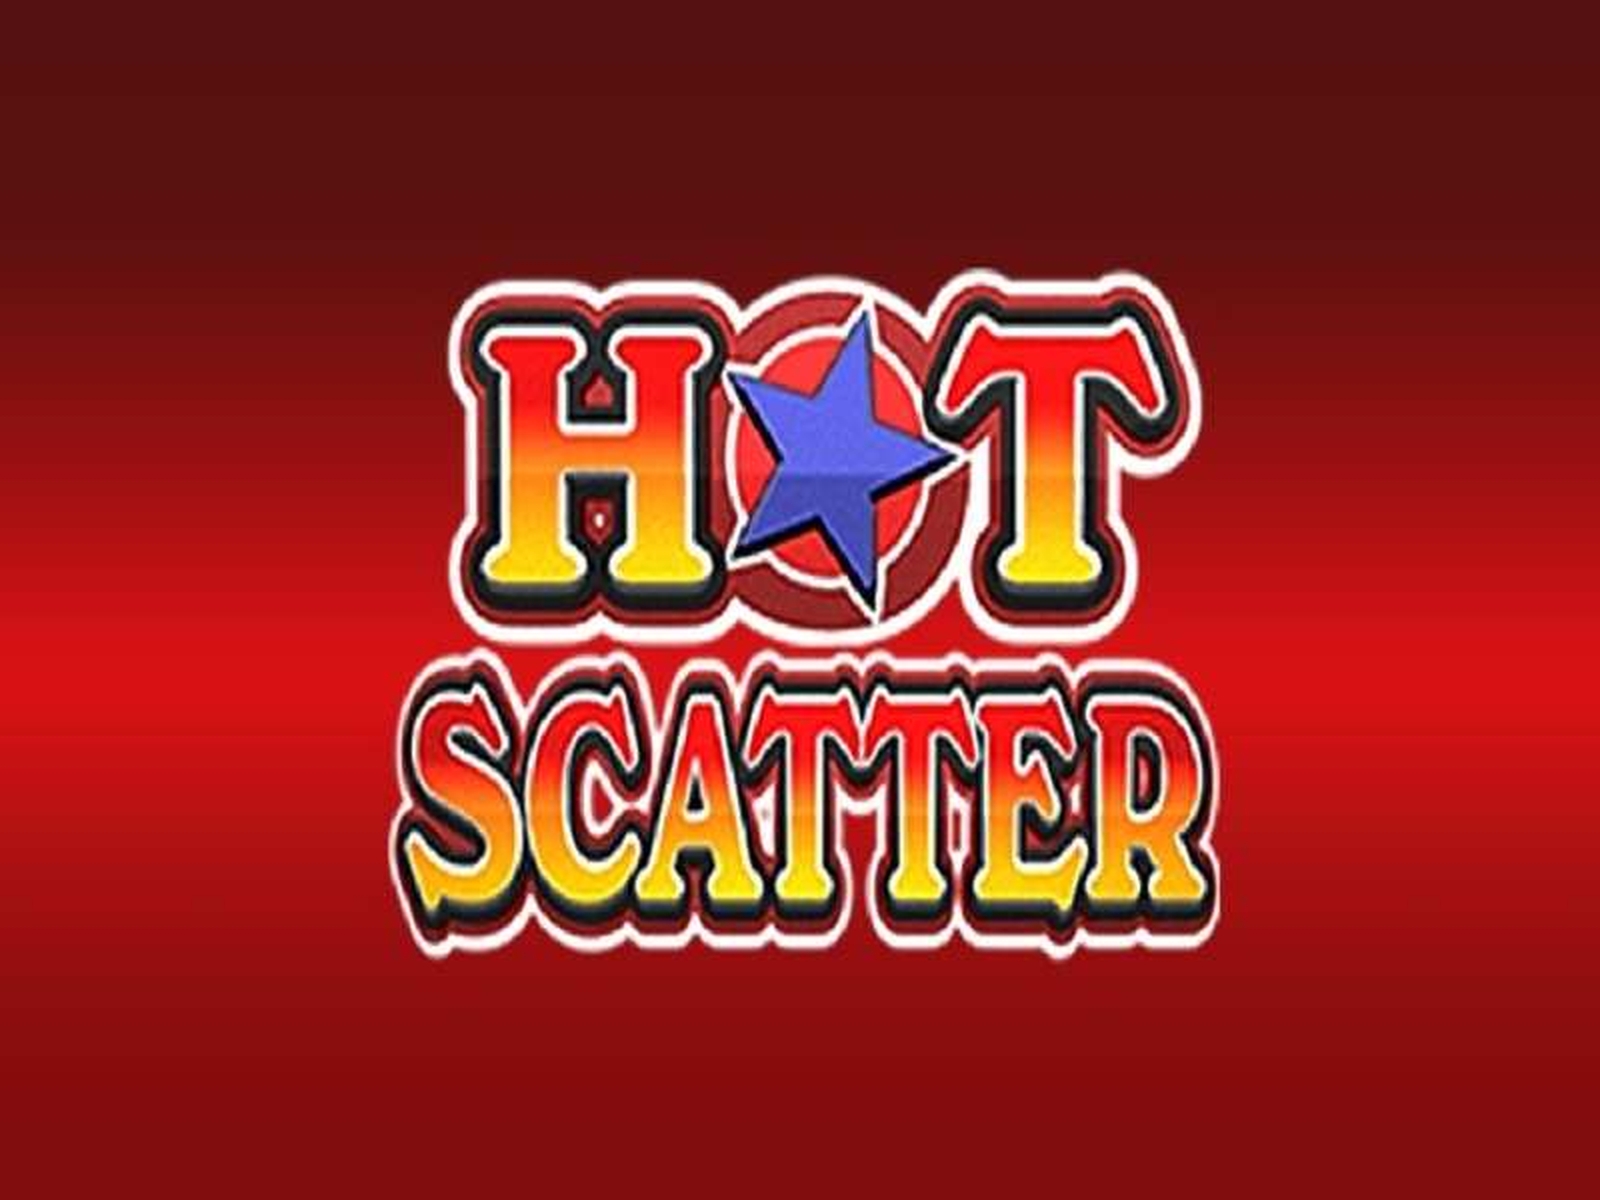 Hot Scatter demo